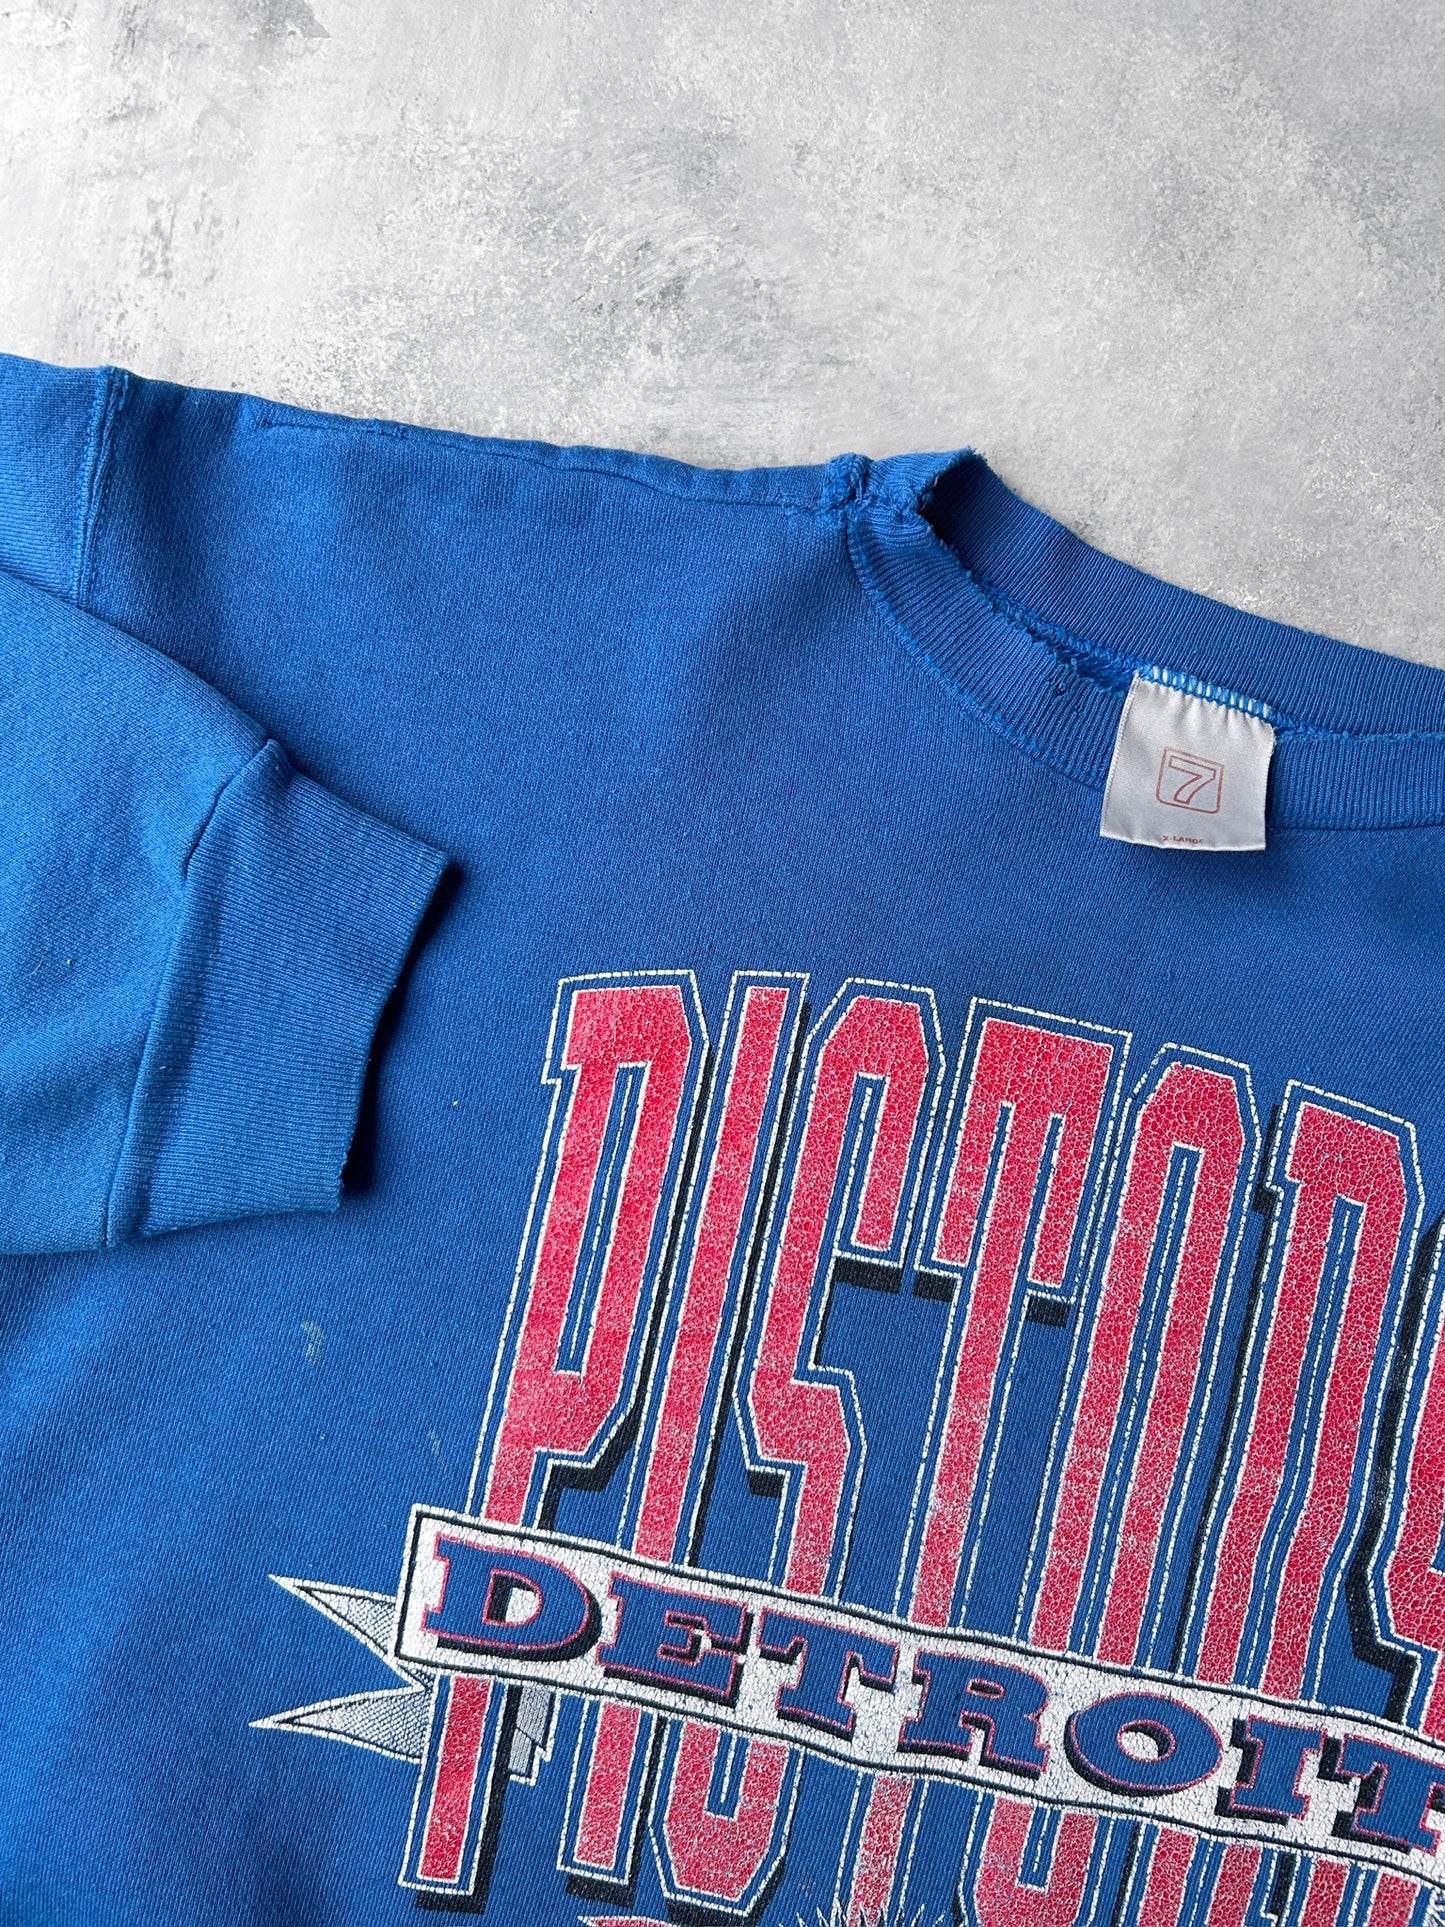 Detroit Pistons Sweatshirt 90's - Large